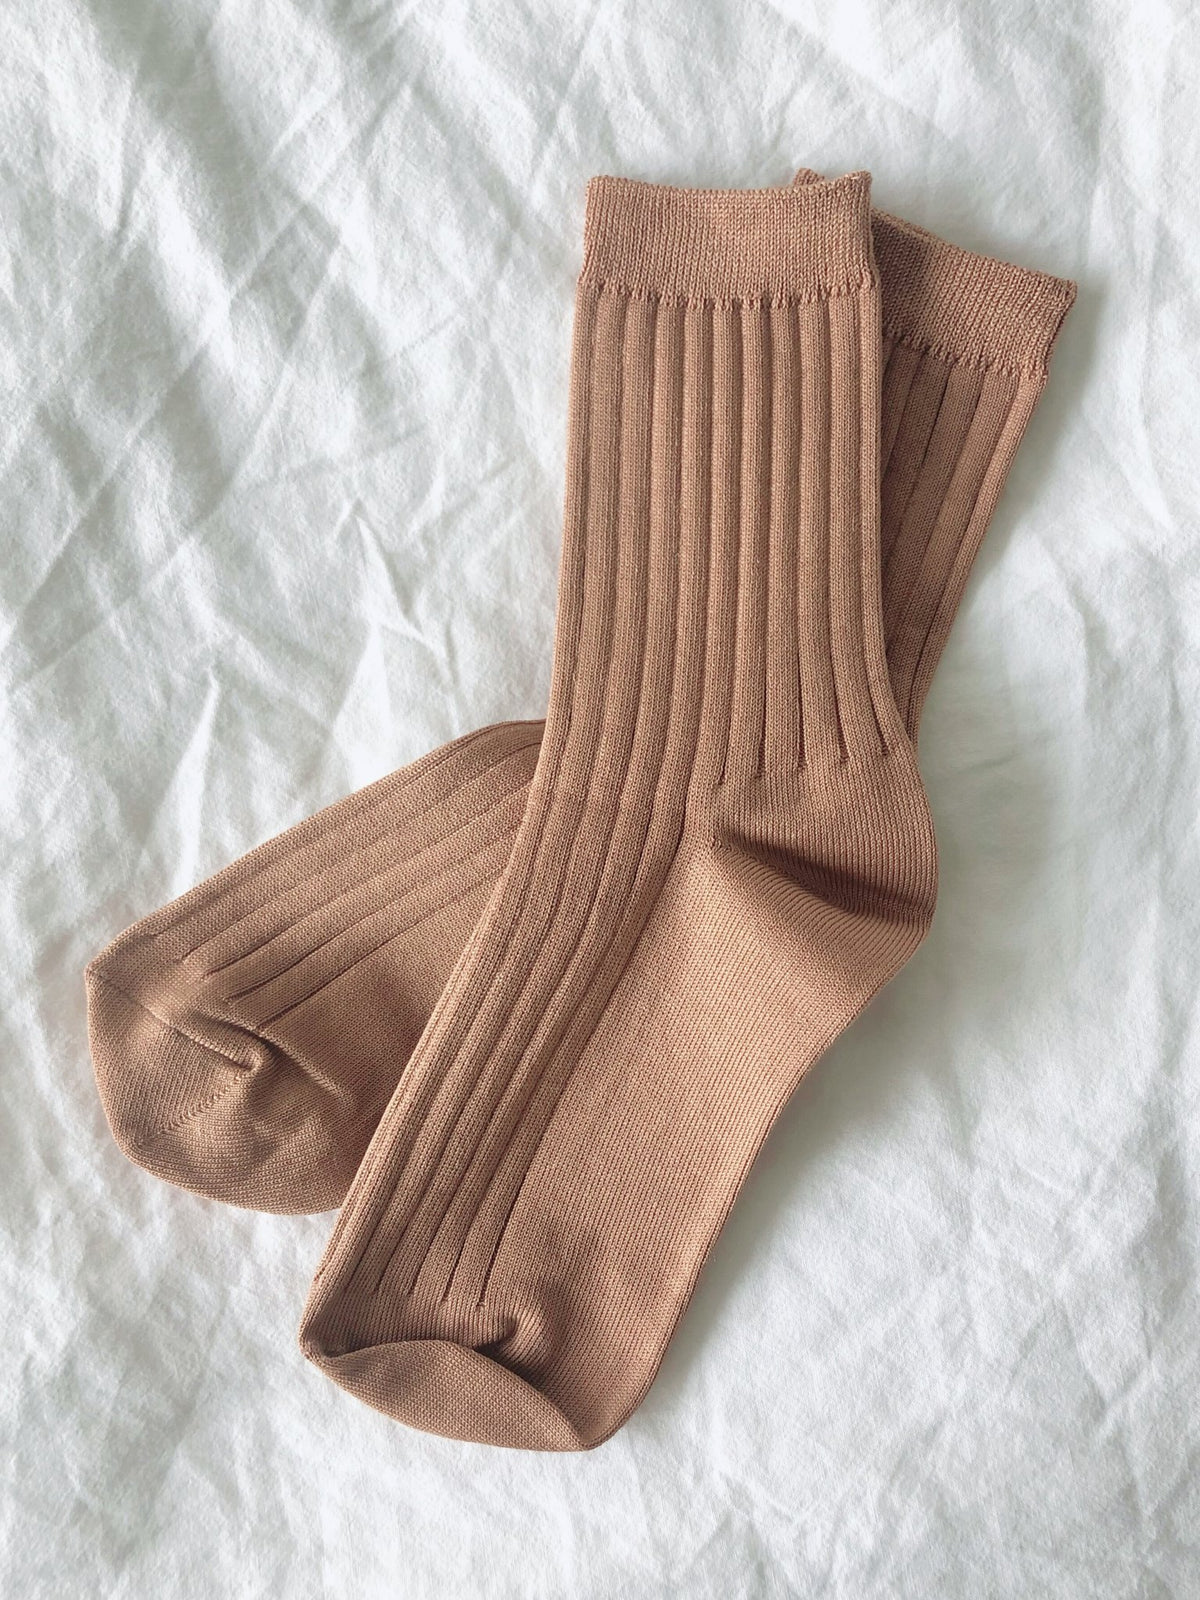 Her socks - William Bee